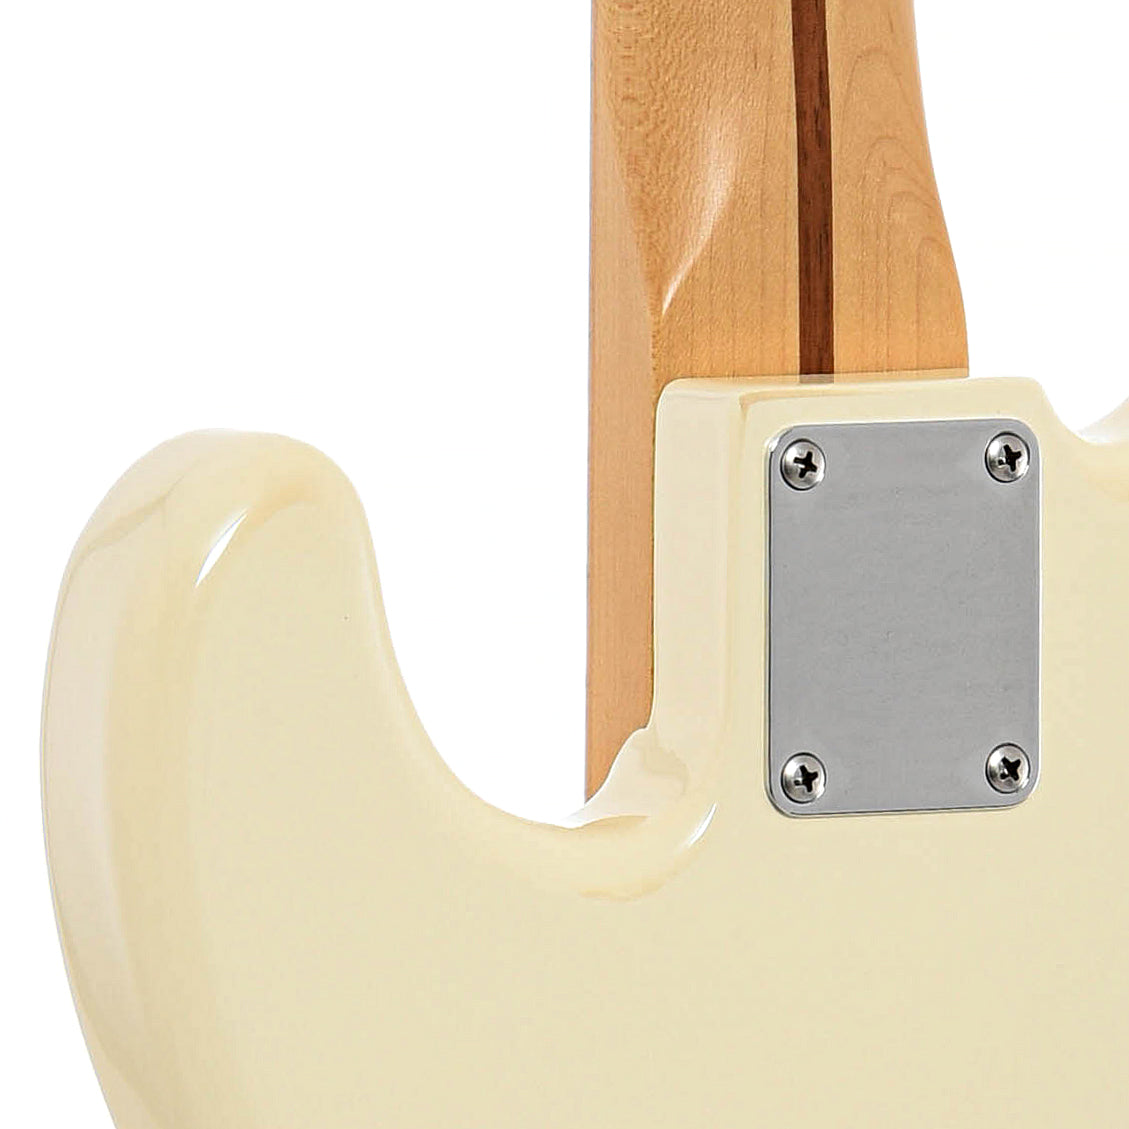 Neck joint of Fender Standard Precision Bass (2016)